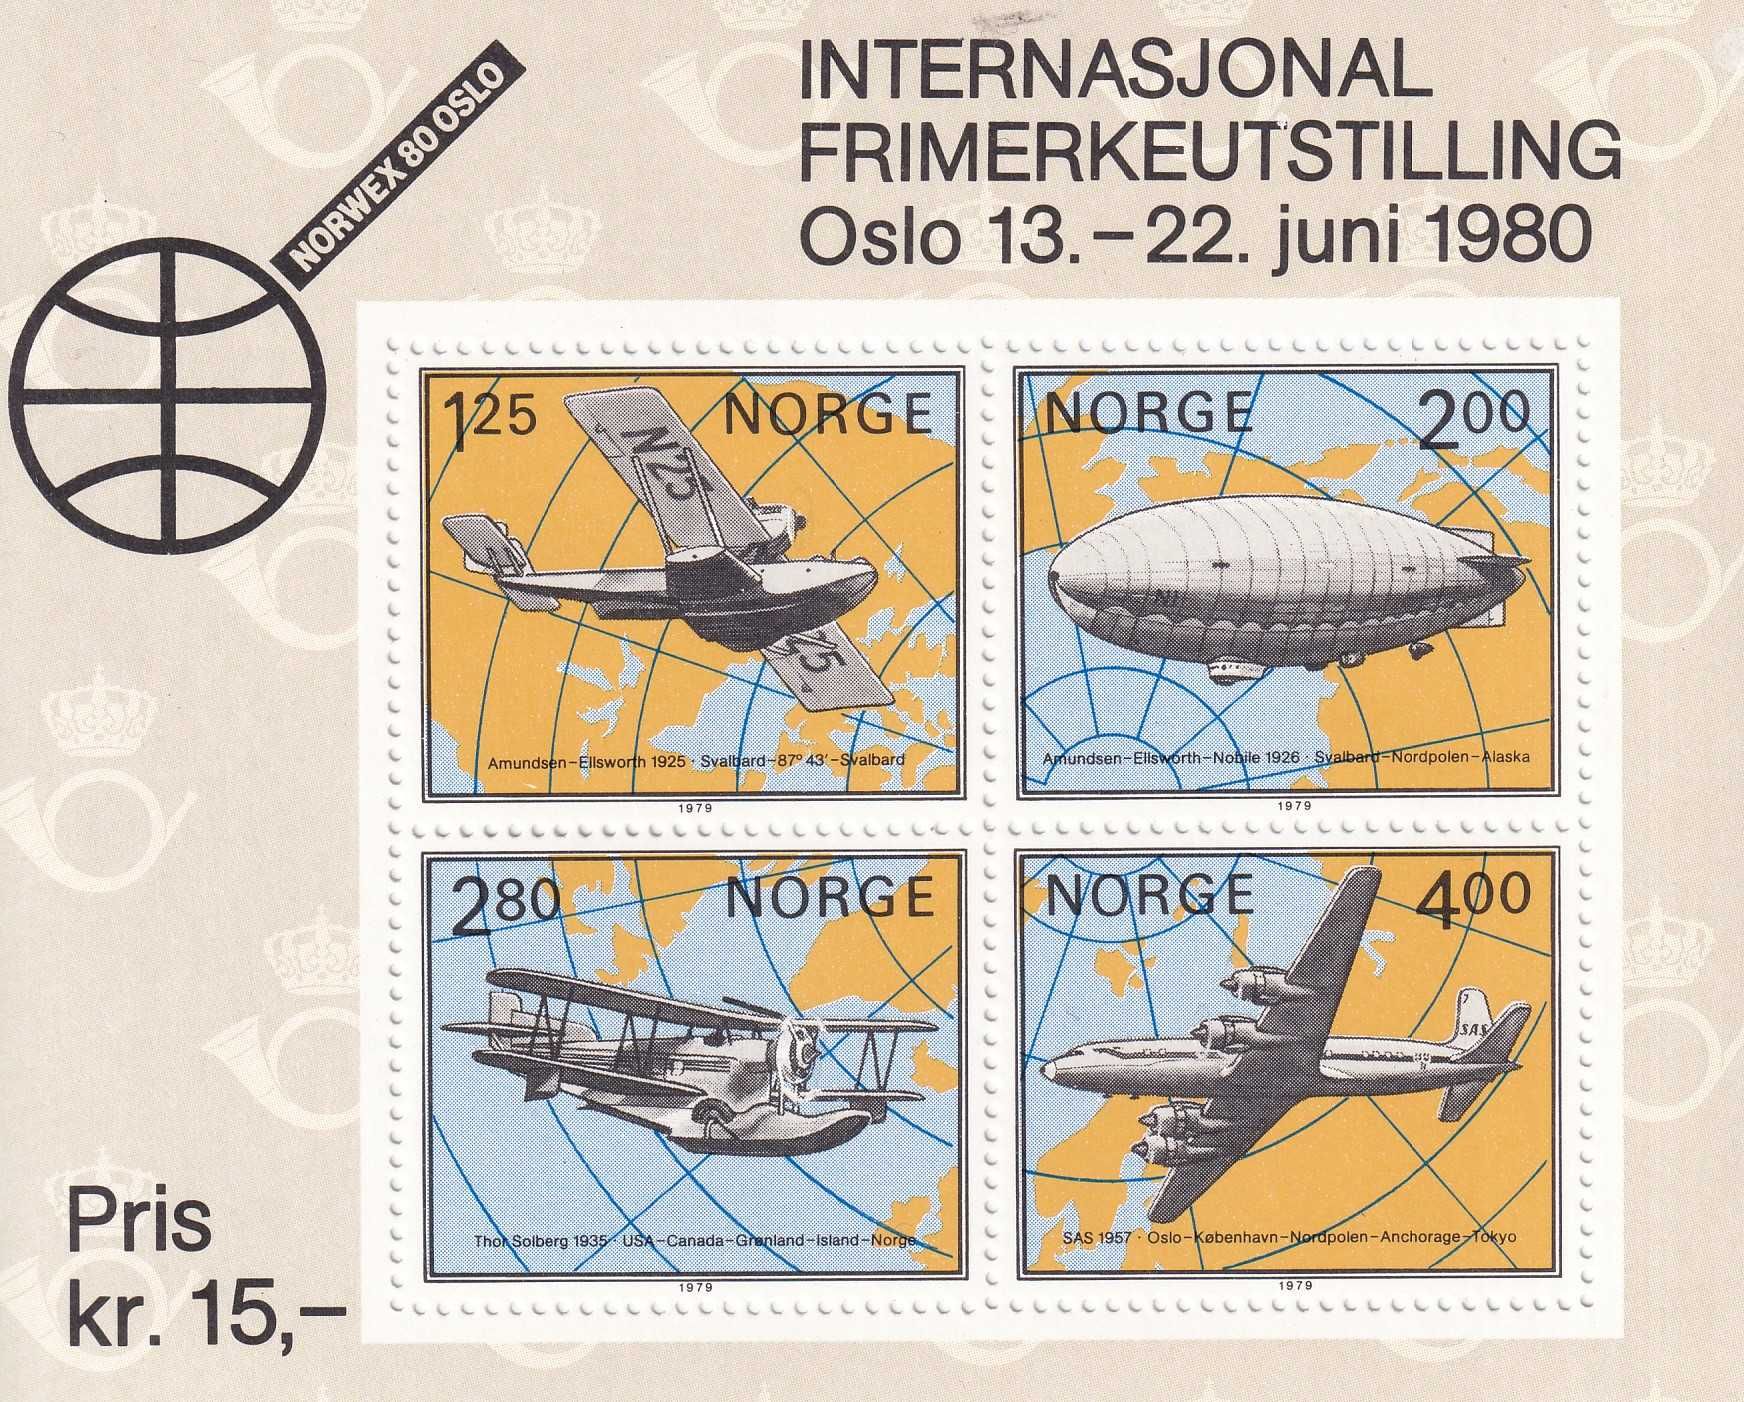 Norwegia 1979 cena 5,30 zł kat.4€ - lotnictwo